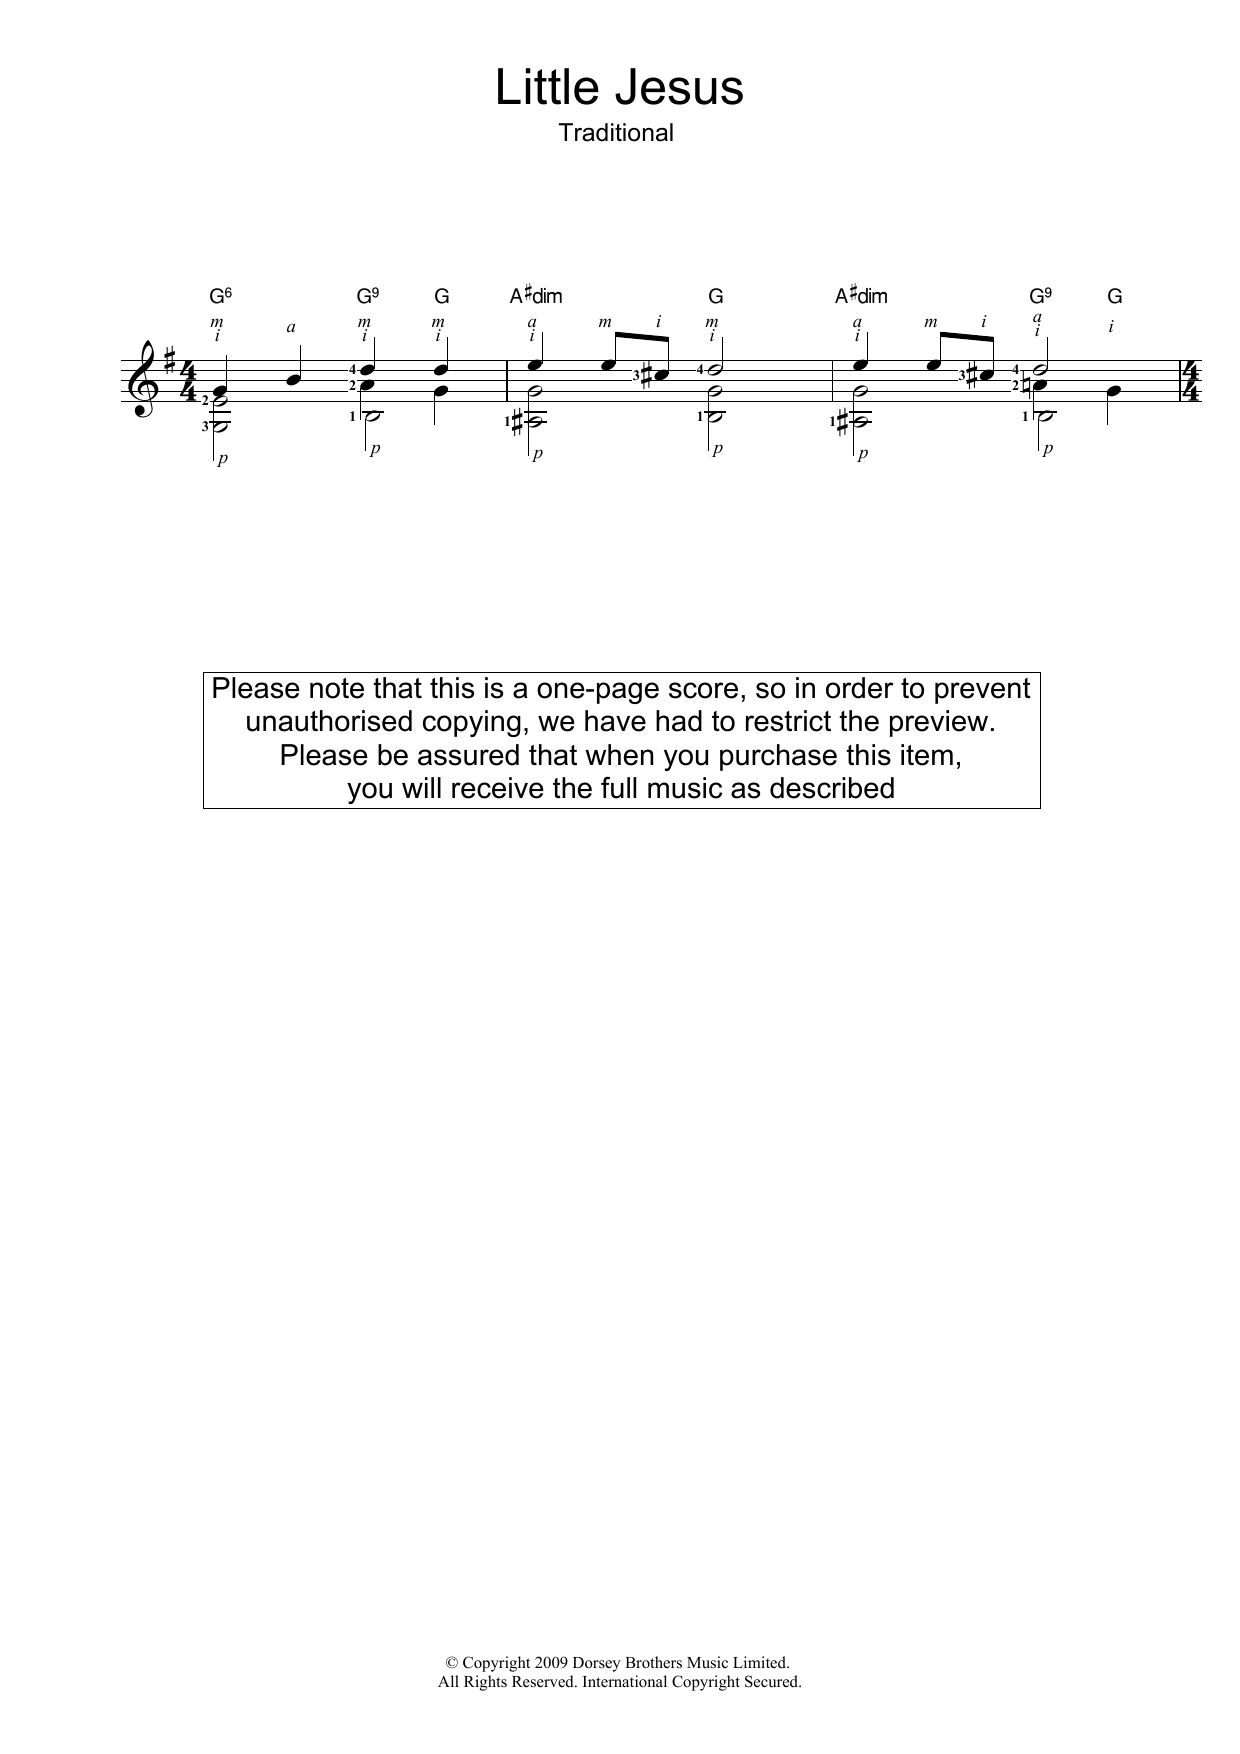 Traditional Carol Little Jesus (Rocking Carol) Sheet Music Notes & Chords for Guitar - Download or Print PDF